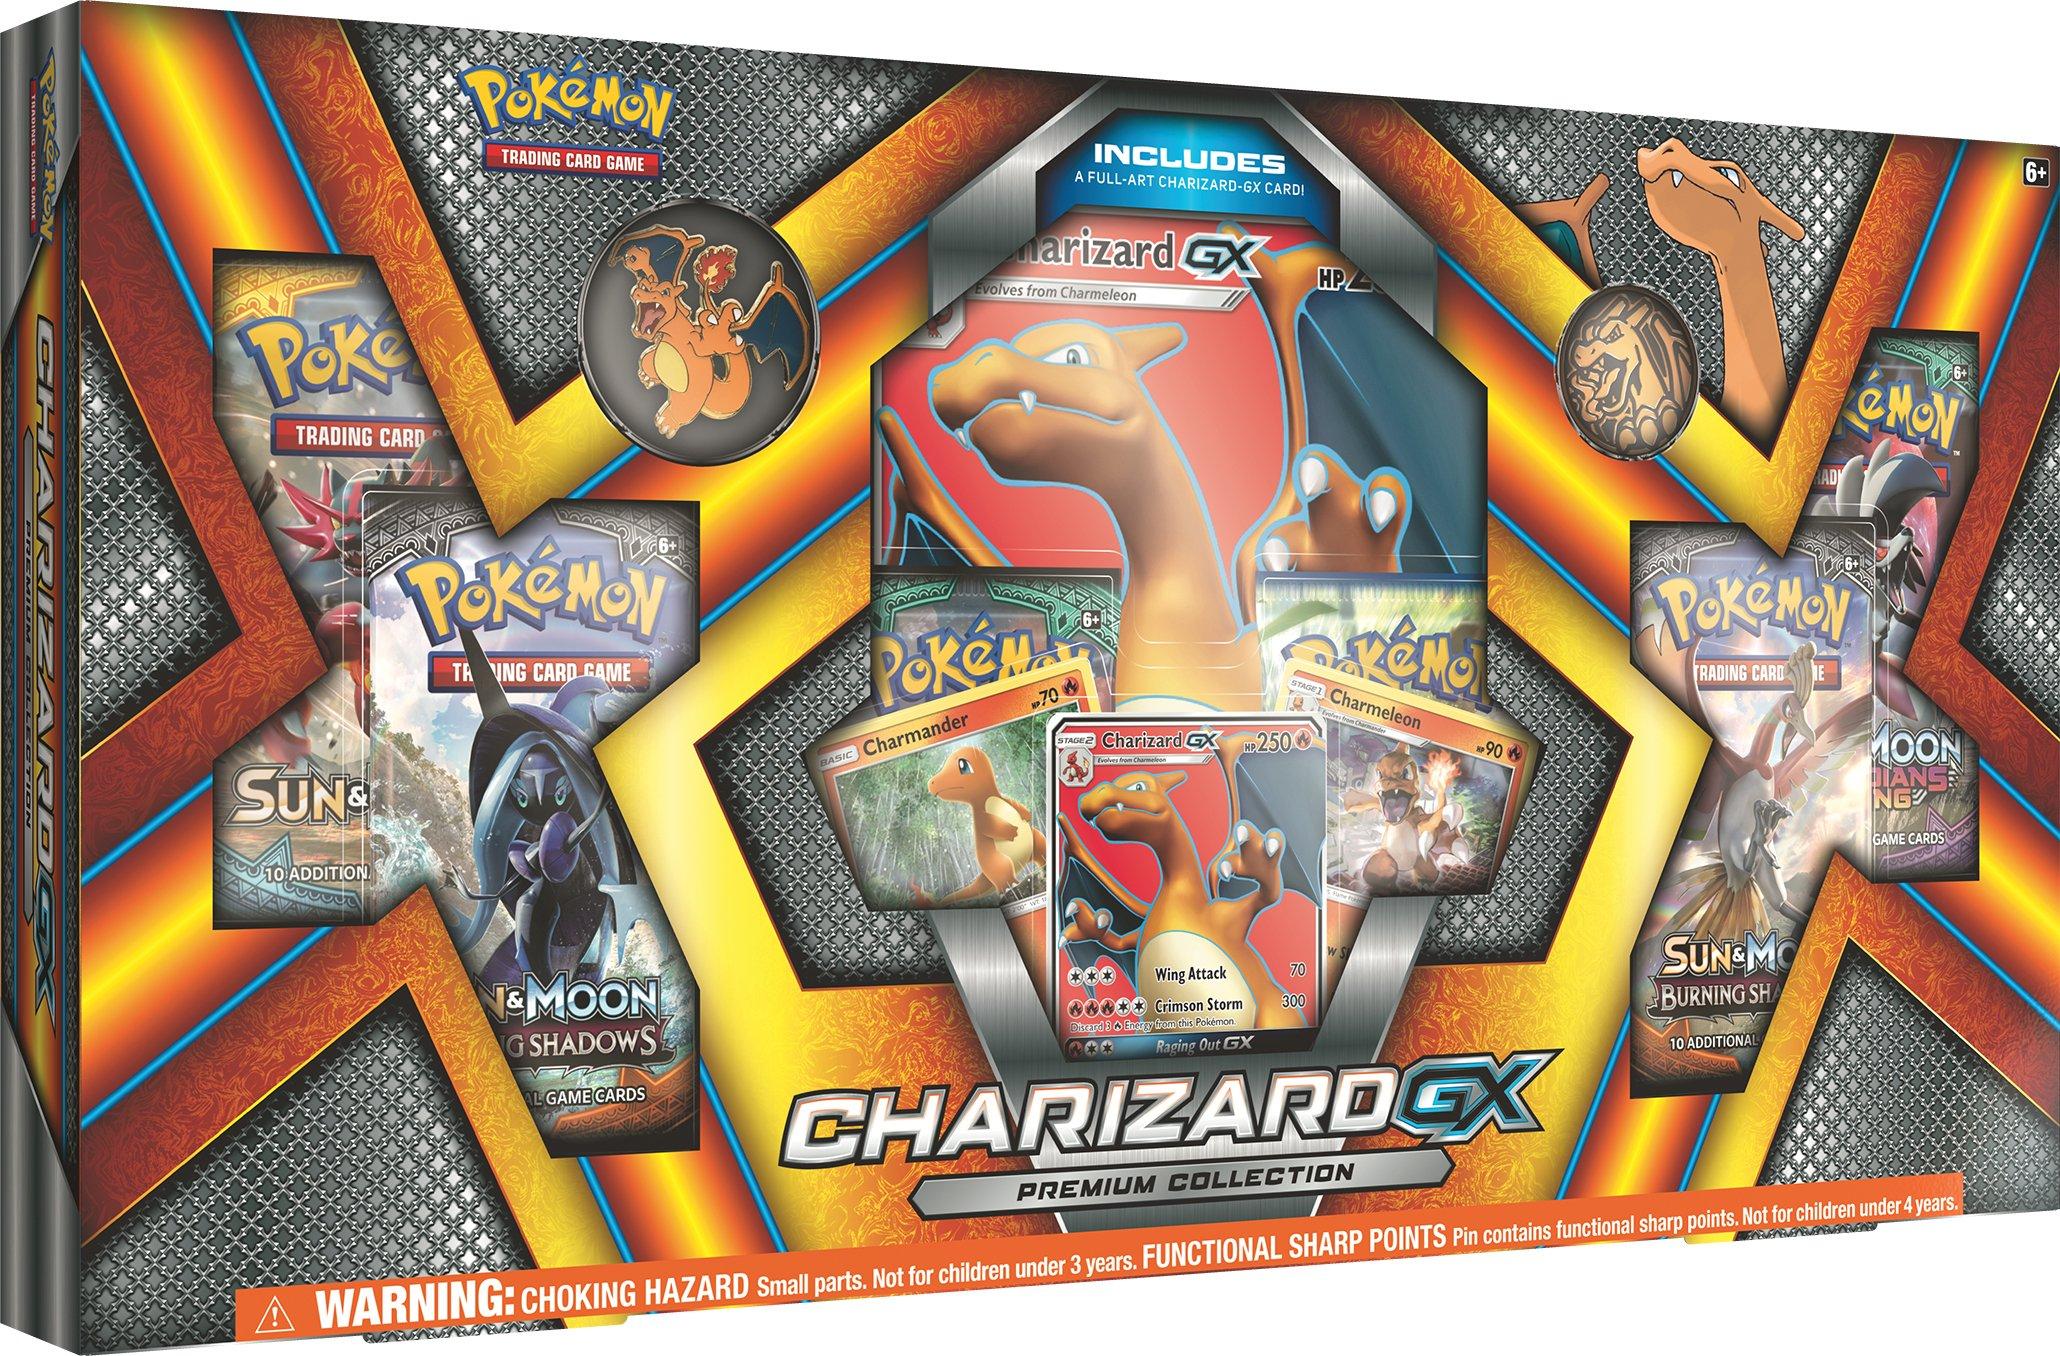 Pokemon Trading Card Game Charizard Gx Premium Collection Gamestop